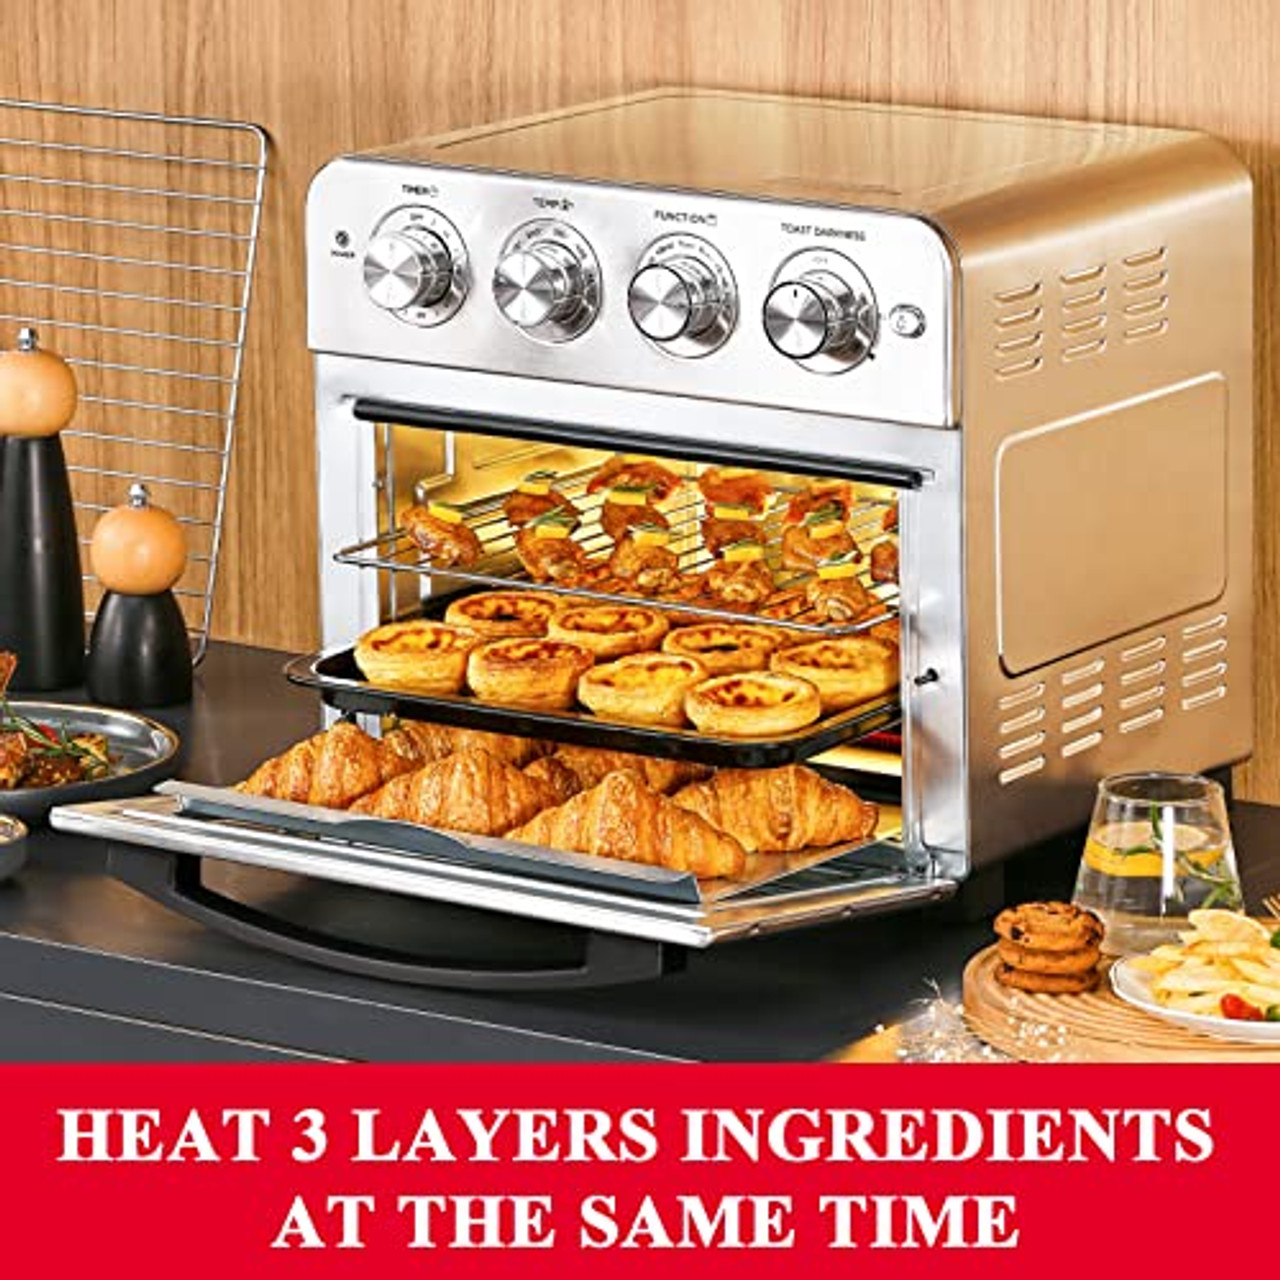 Geek Chef Air Fryer Oven 10 Quart, Oil-less Air Fryer Toaster Oven